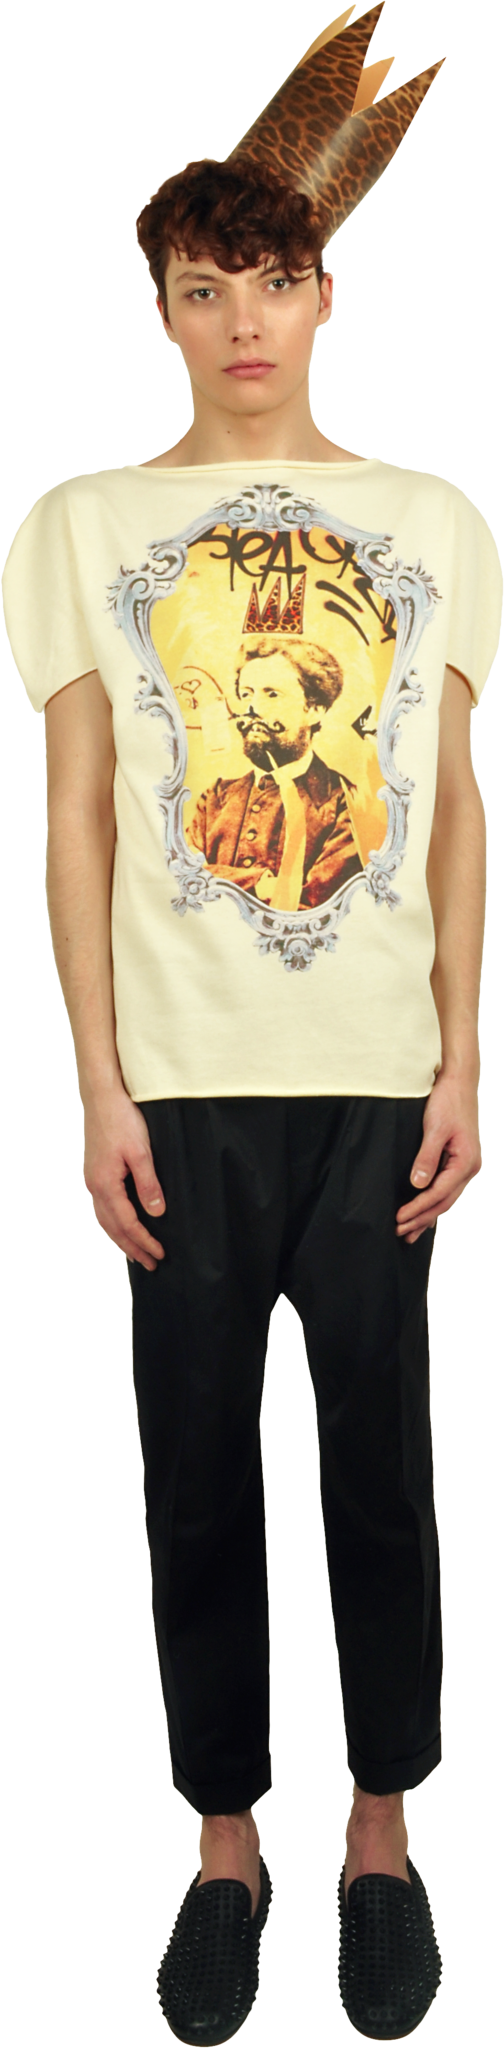 Princely T-Shirt "Le Roi Rasta" in Vanilla